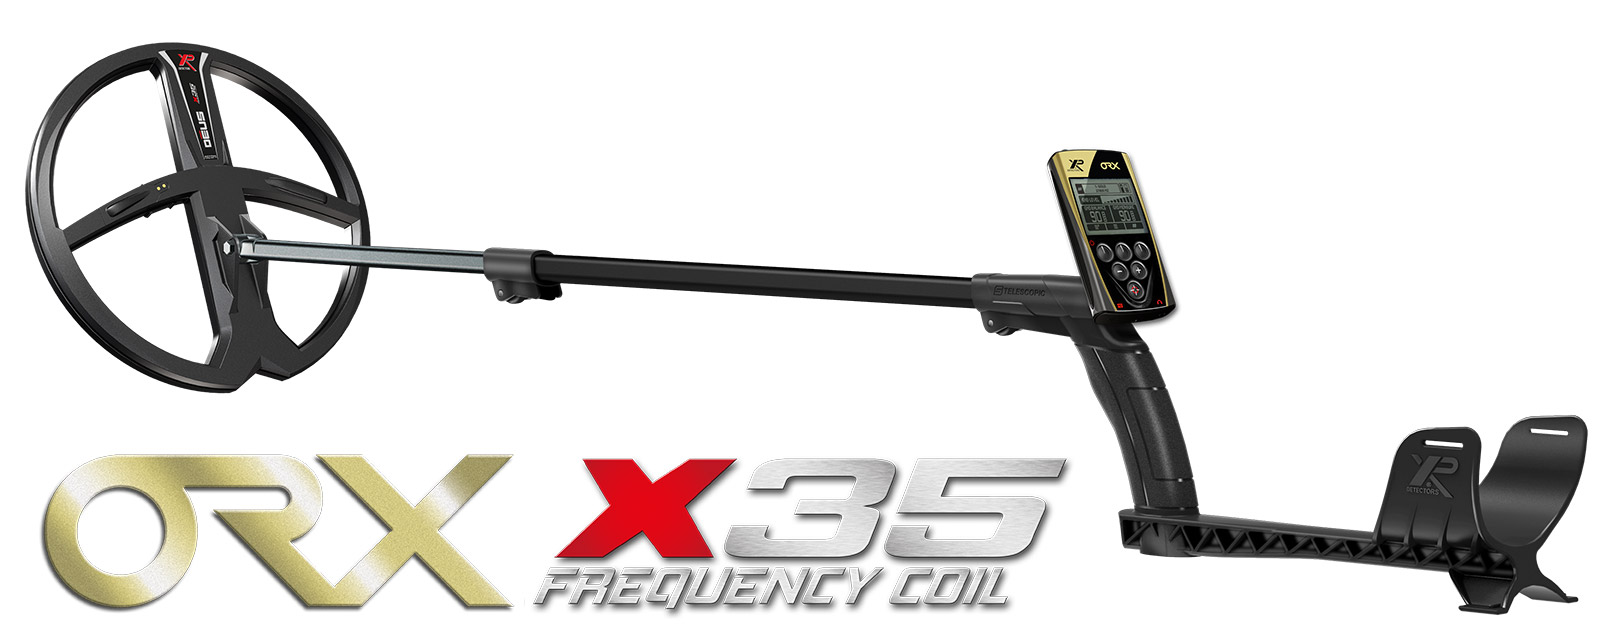 XP ORX 28 X35 - detektor kovů